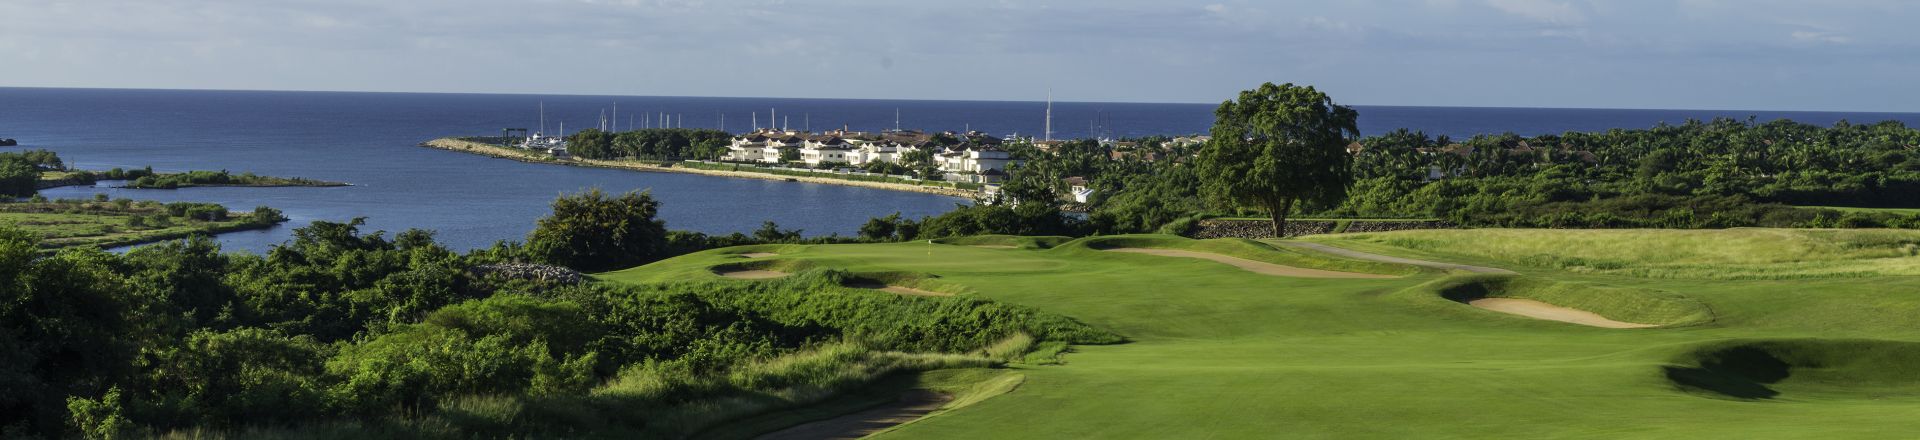 Golf in Dominican Republic at Dye Fore Golf Course of Casa de Campo